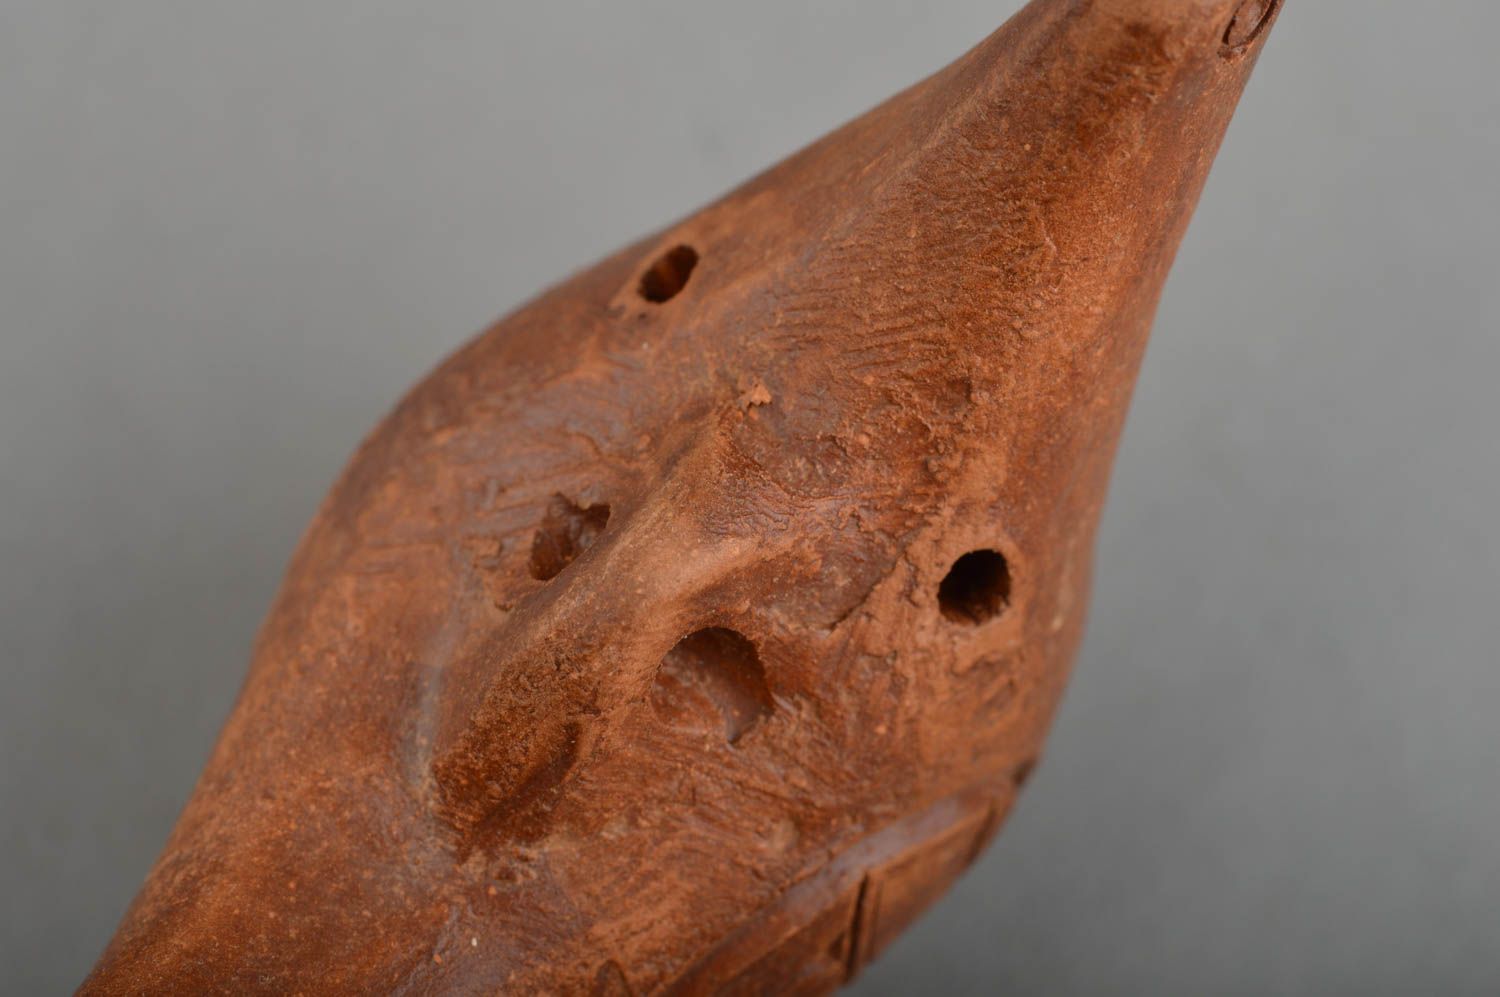 Silbato de barro instrumento musical artesanal regalo original marrón pajarito foto 4